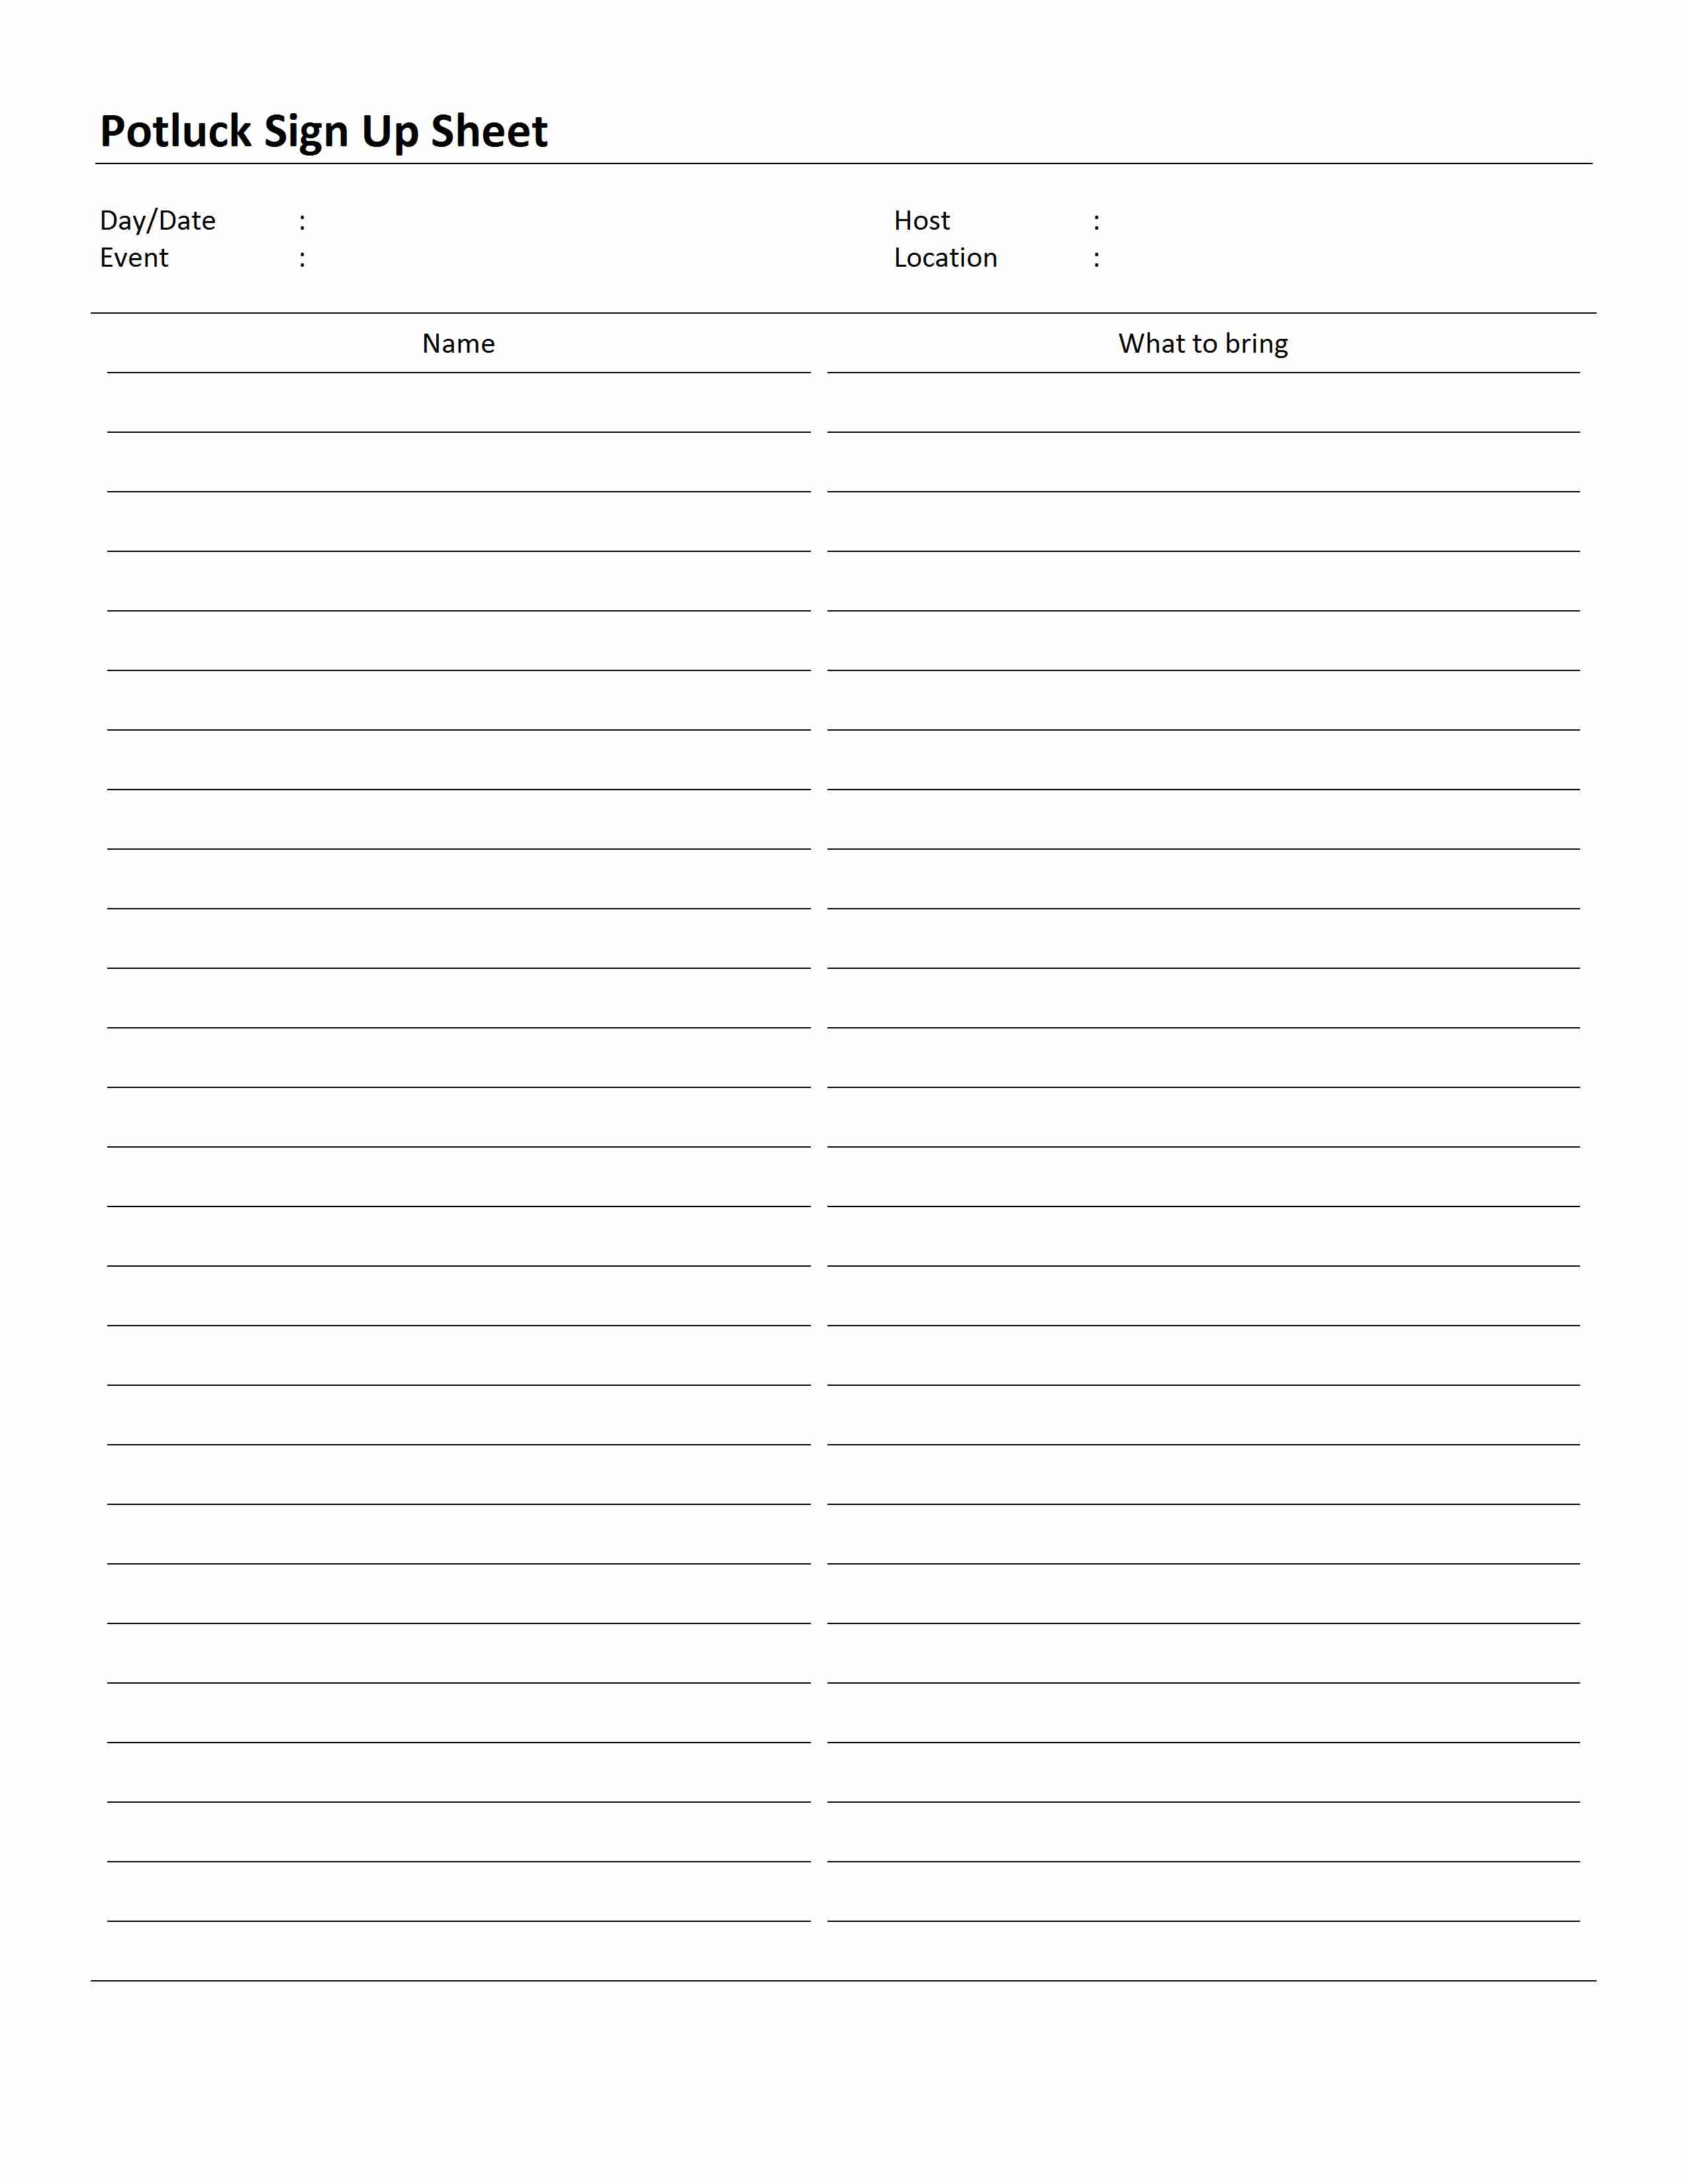 potluck sign up sheet ideas